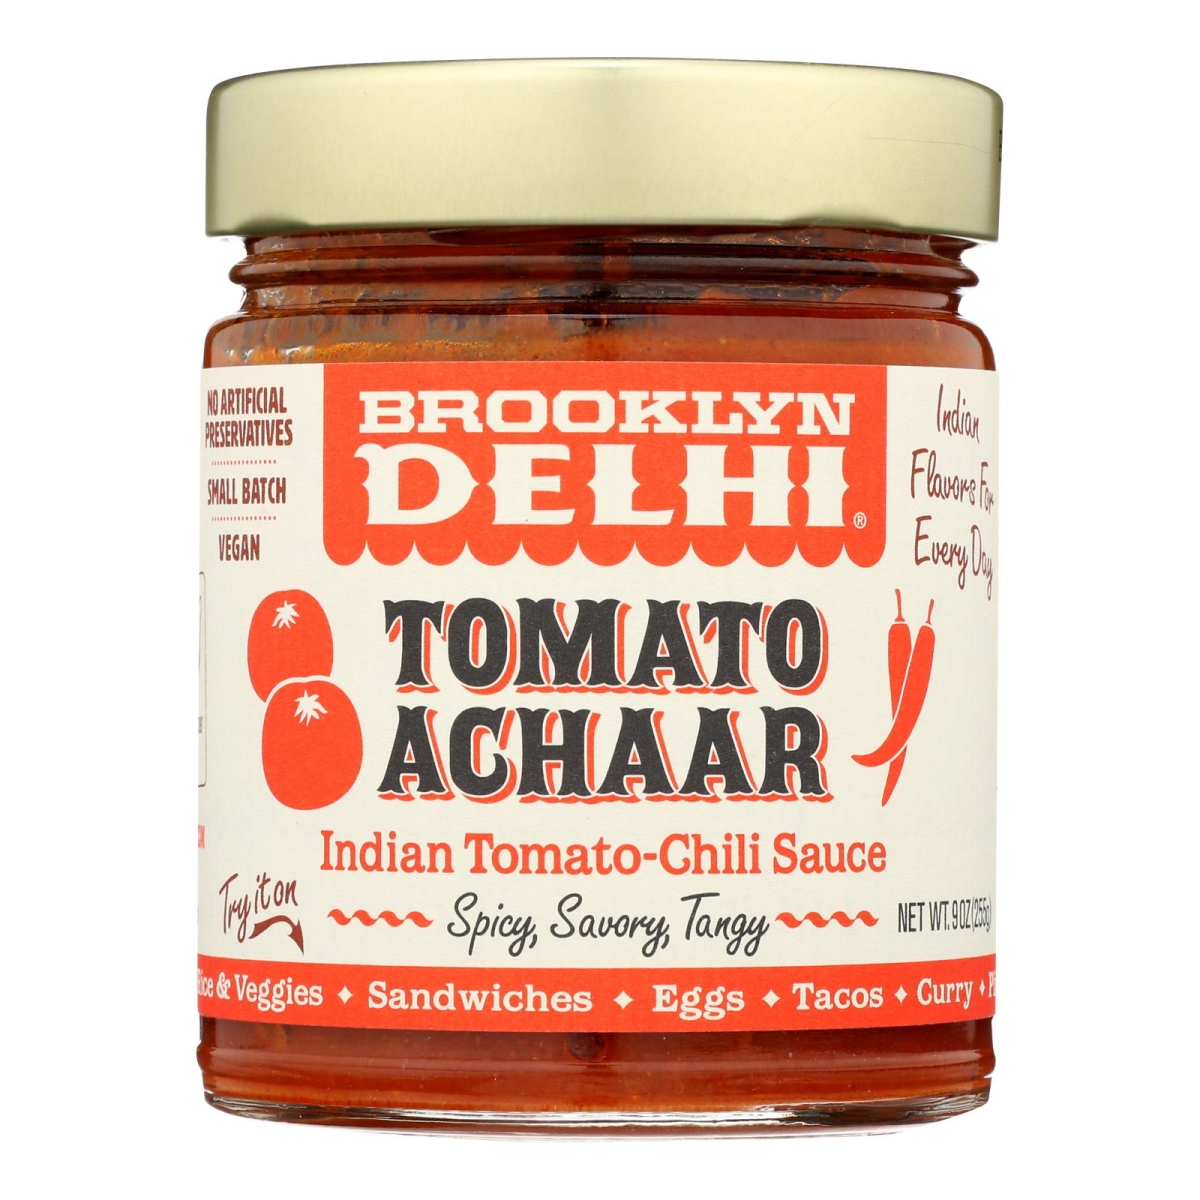 Brooklyn Delhi Brooklyn Delhi, Tomato Achaar Indian Tomato Relish Food Product Image